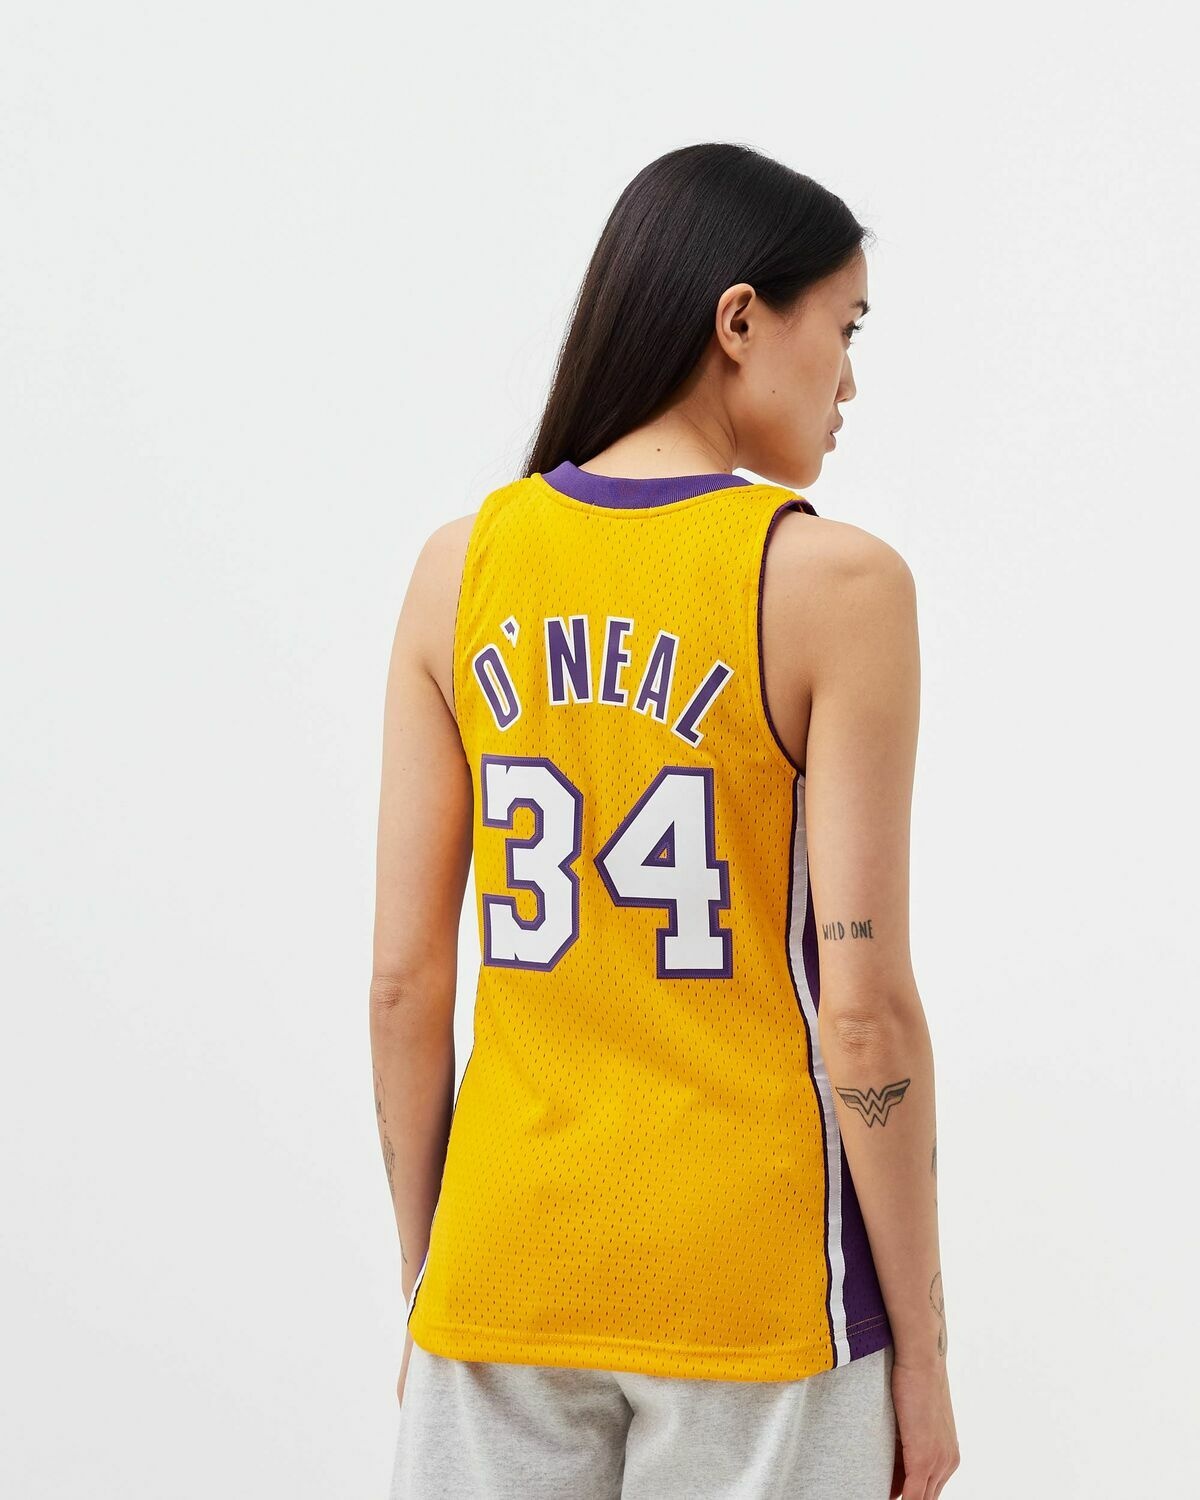 Mitchell & Ness Nba Women's Swingman Jersey Los Angeles Lakers 1999 00 Shaquille O´Neal #34   Purple/Yellow   - Womens -   Tops & Tanks   M